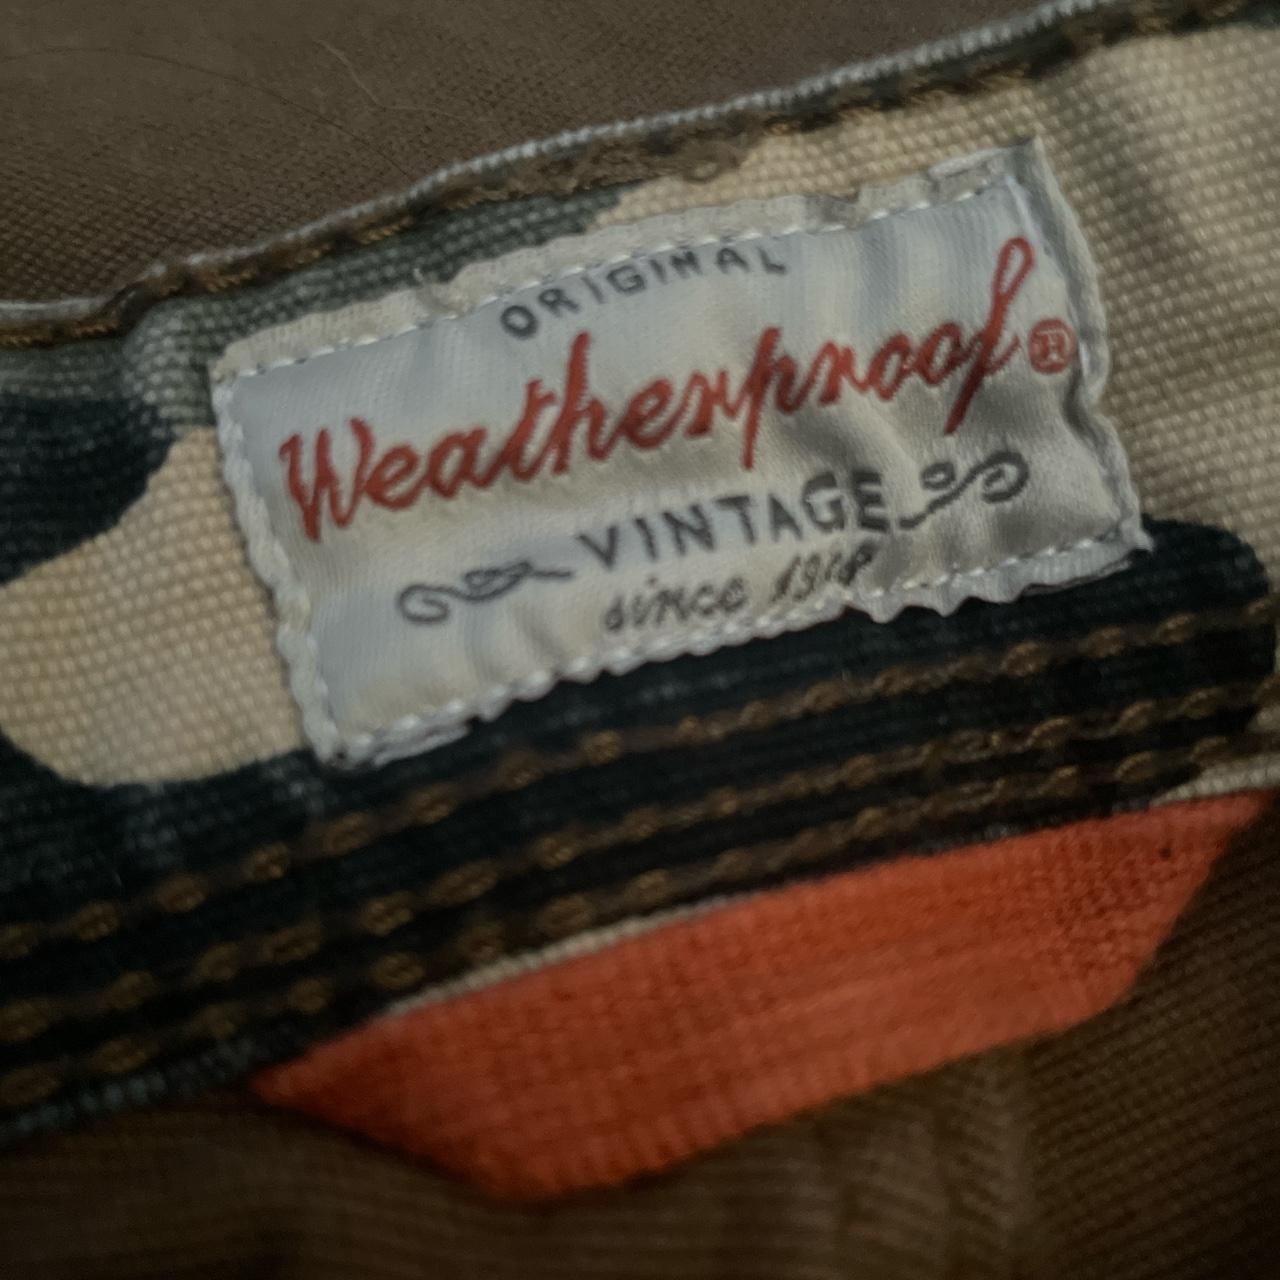 Light Brown Weatherproof Vintage Pants Size: Length - Depop